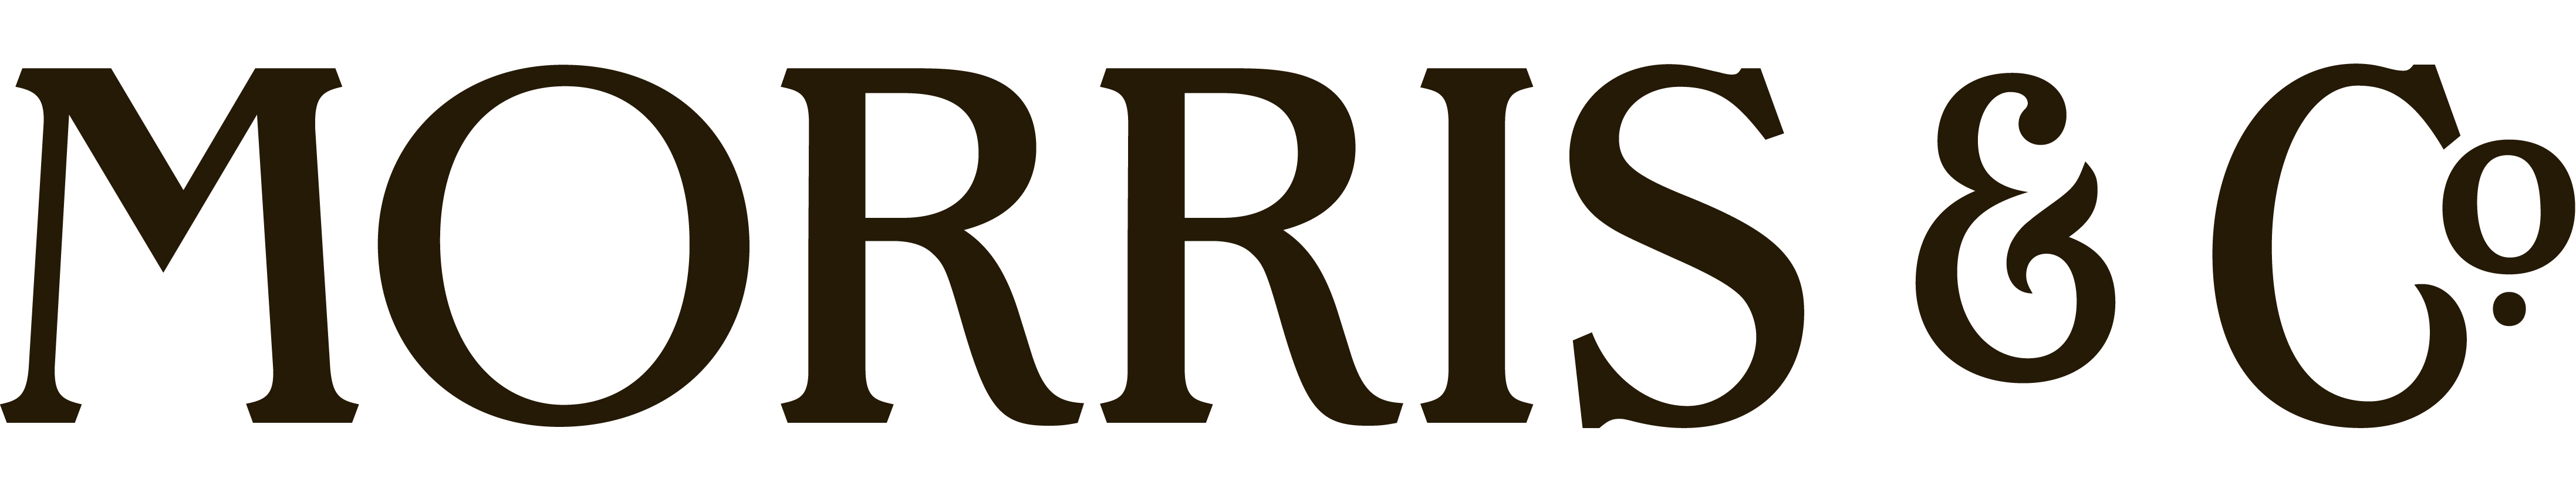 Morris & Co. Logo